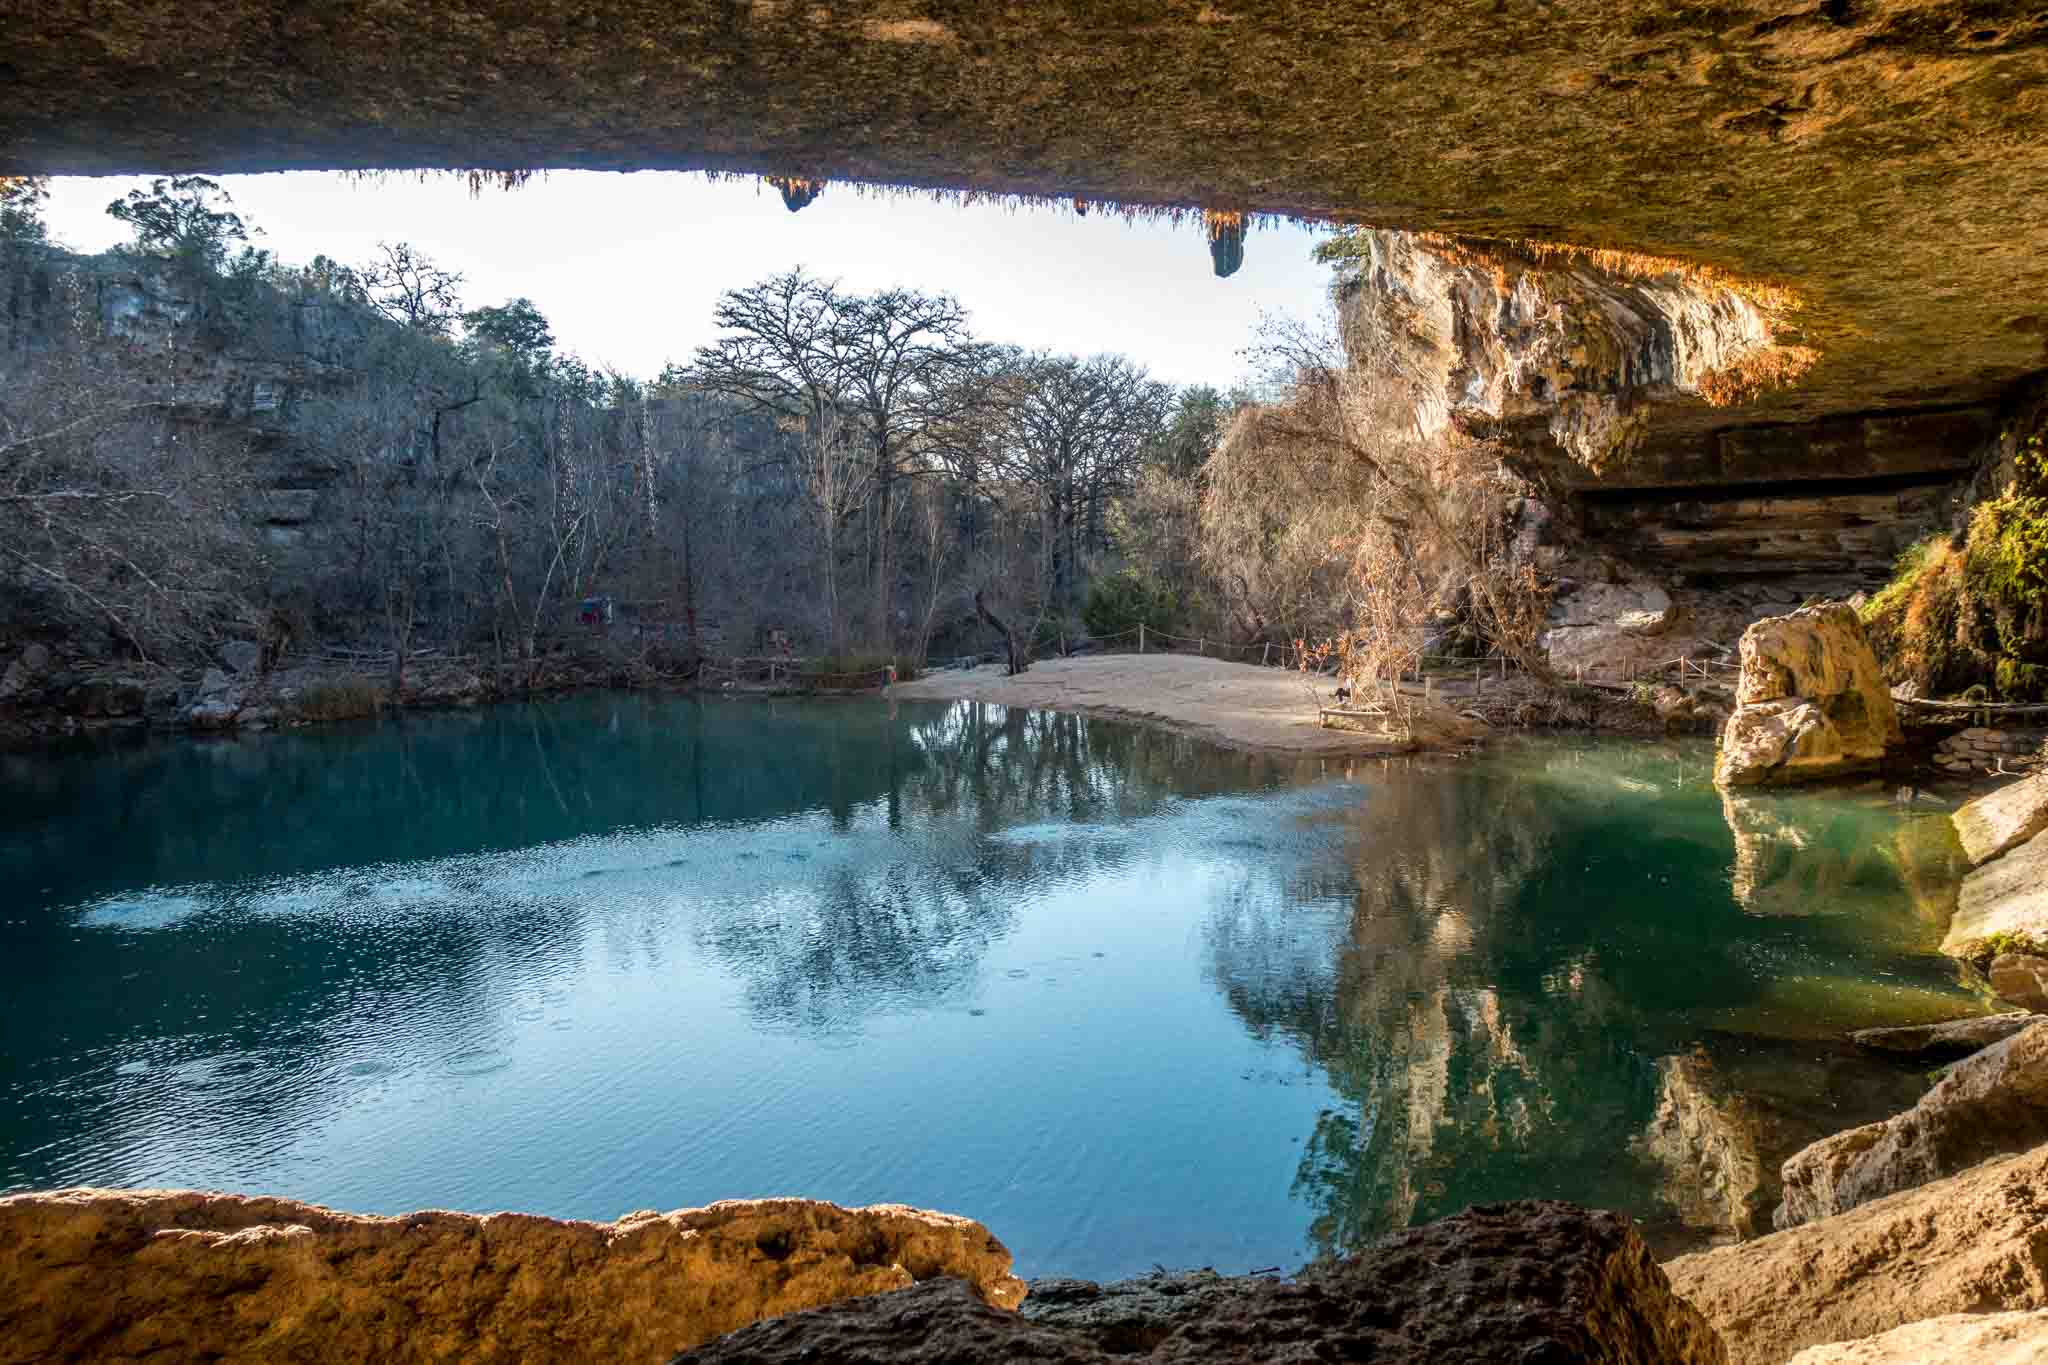 Hamilton Pool, a natural pool and grotto